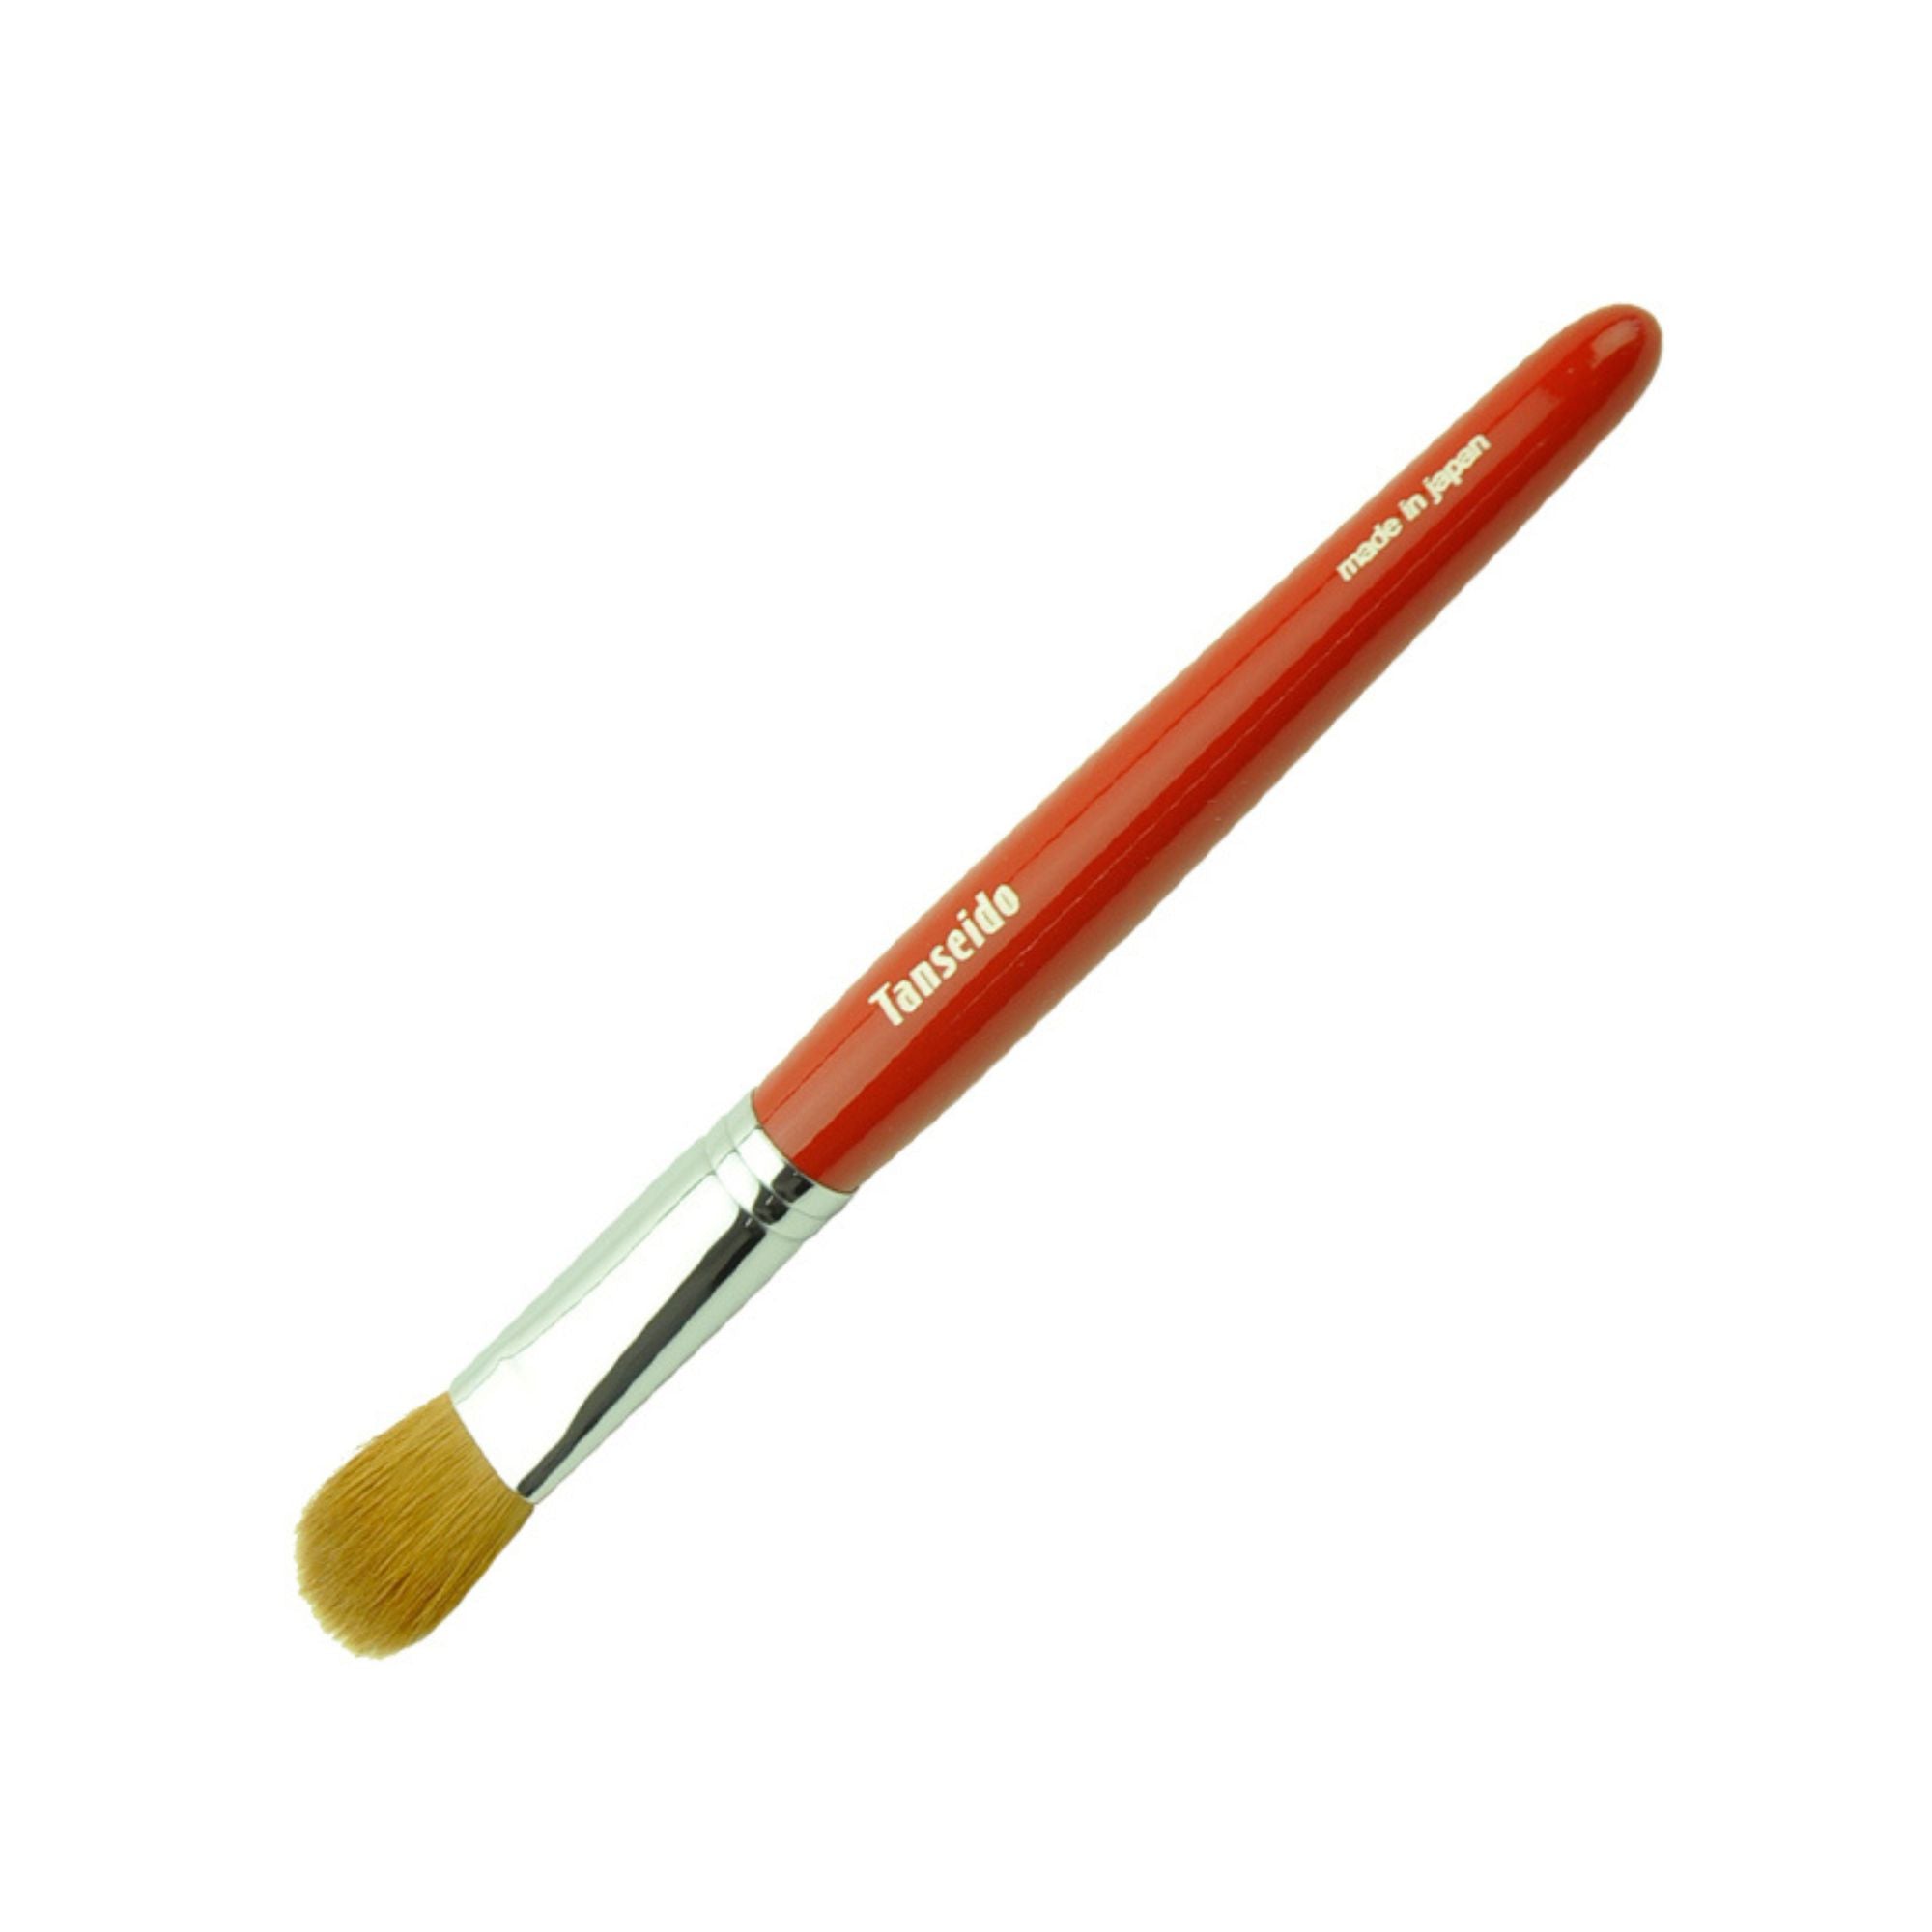 Tanseido KQ12 Eyeshadow Brush - Fude Beauty, Japanese Makeup Brushes